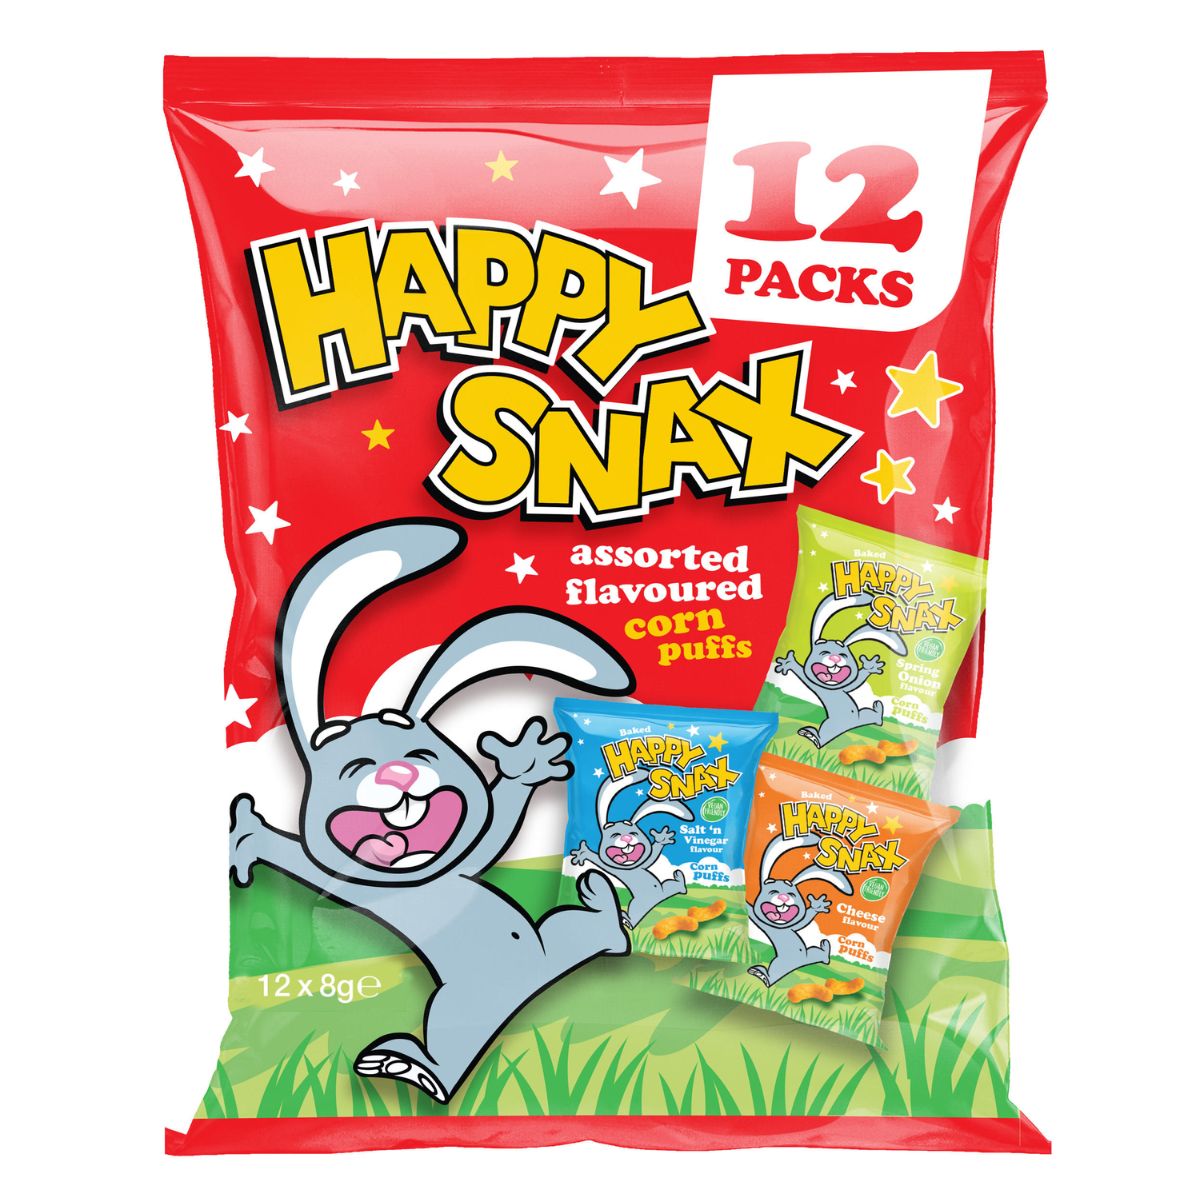 Happy Snax - Crisps Assorted Flavoured Corn Puffs - 12 x 8g - 12 packs.